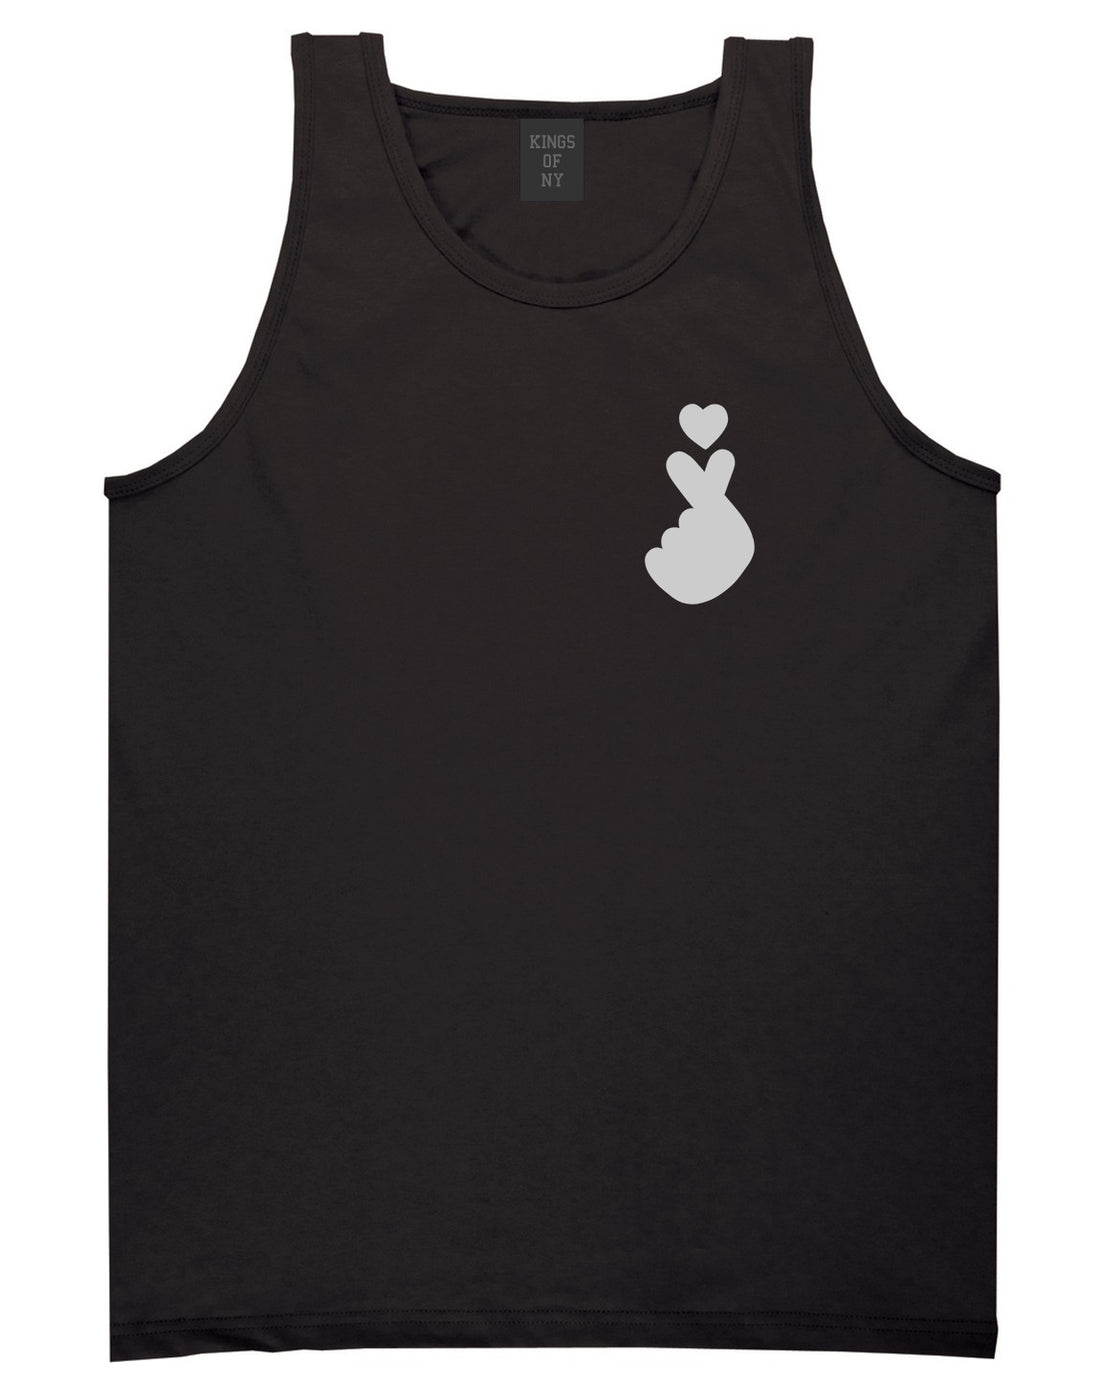 Finger Heart Emoji Chest Mens Black Tank Top Shirt by KINGS OF NY